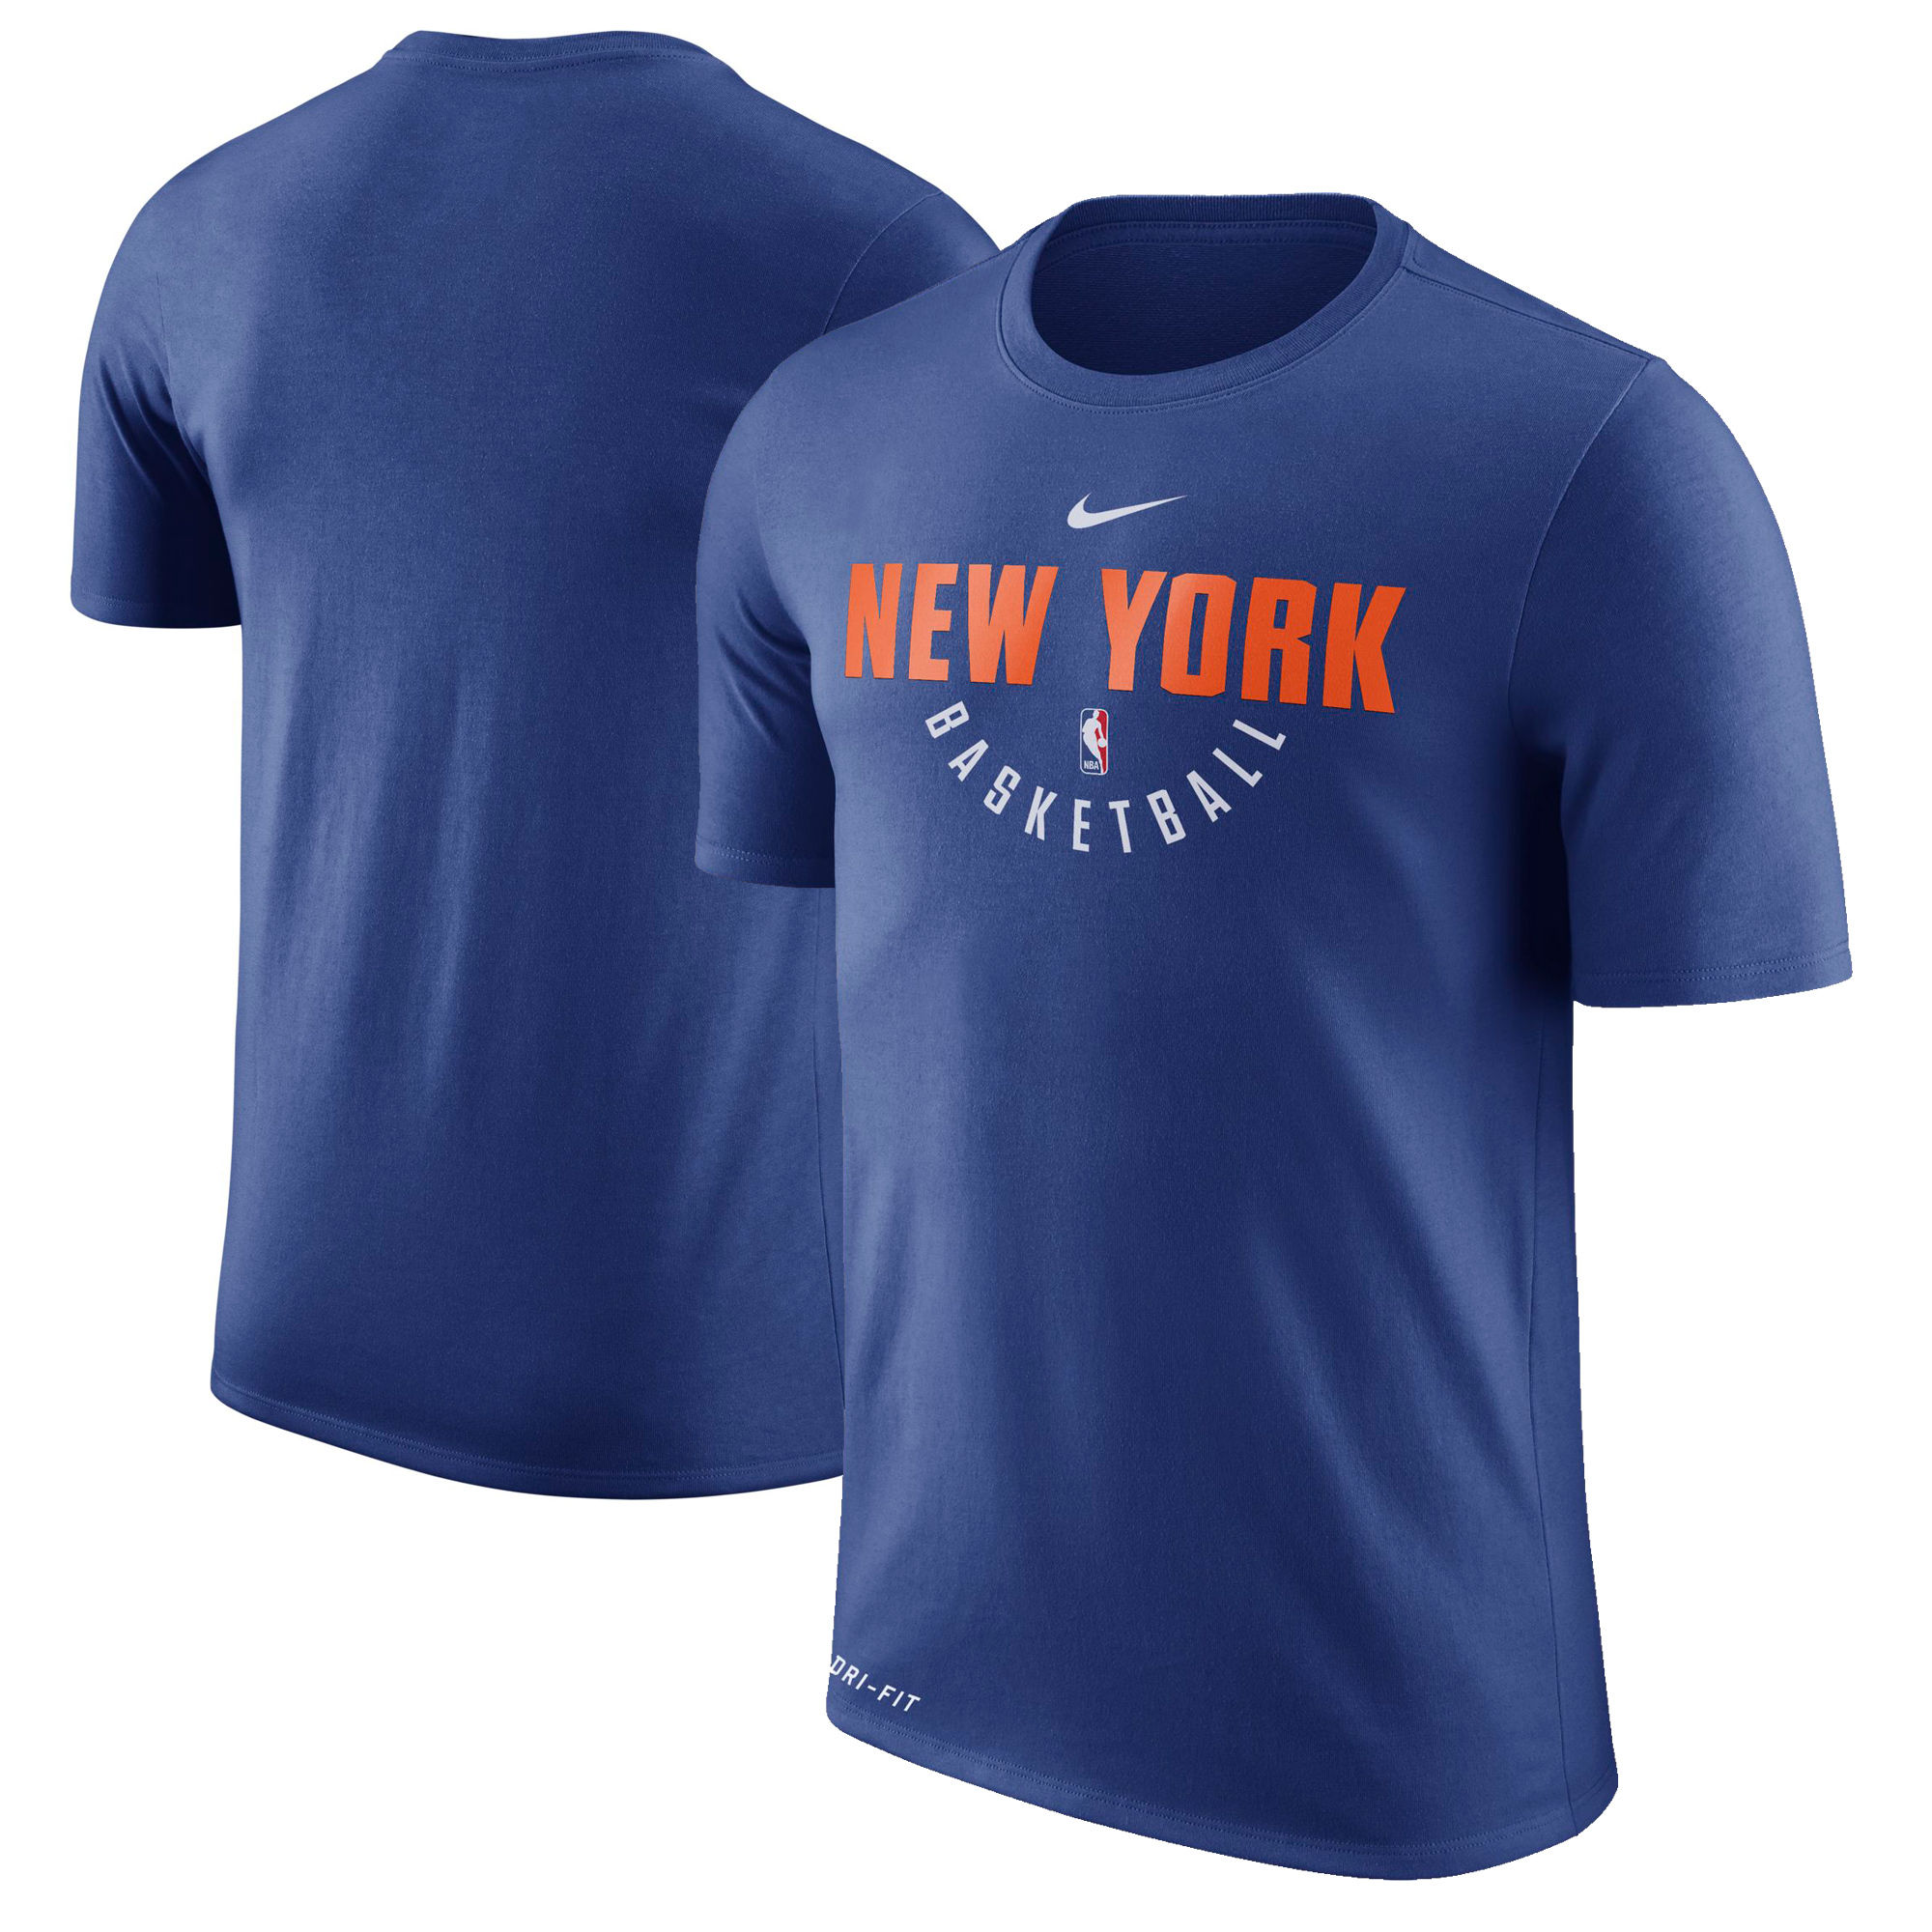 New York Knicks Nike Blue Practice Performance T-Shirt